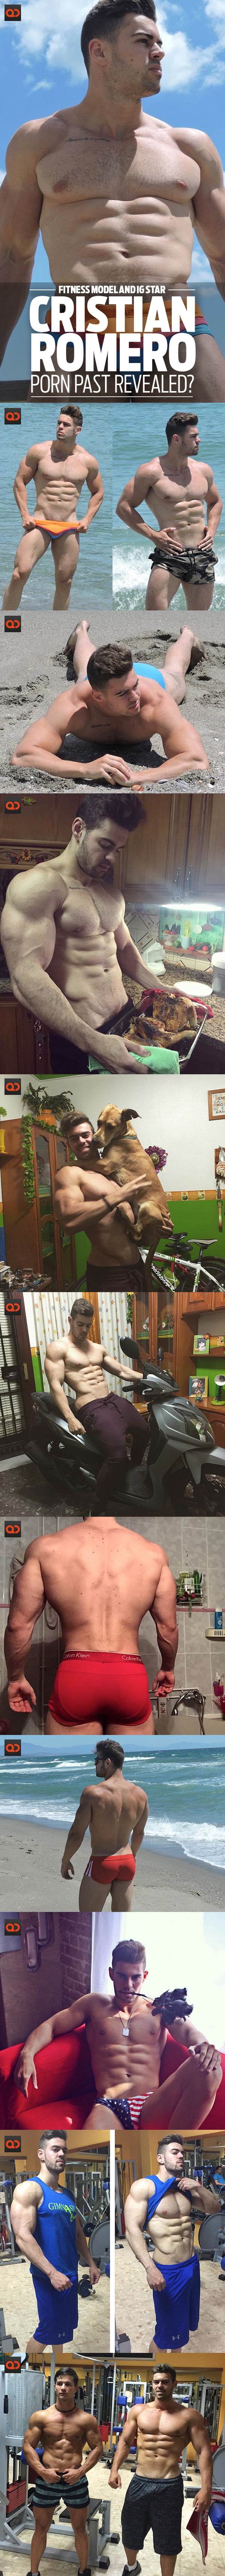 qc-fitness_model_cristian_romero_porn_past_revealed-collage01